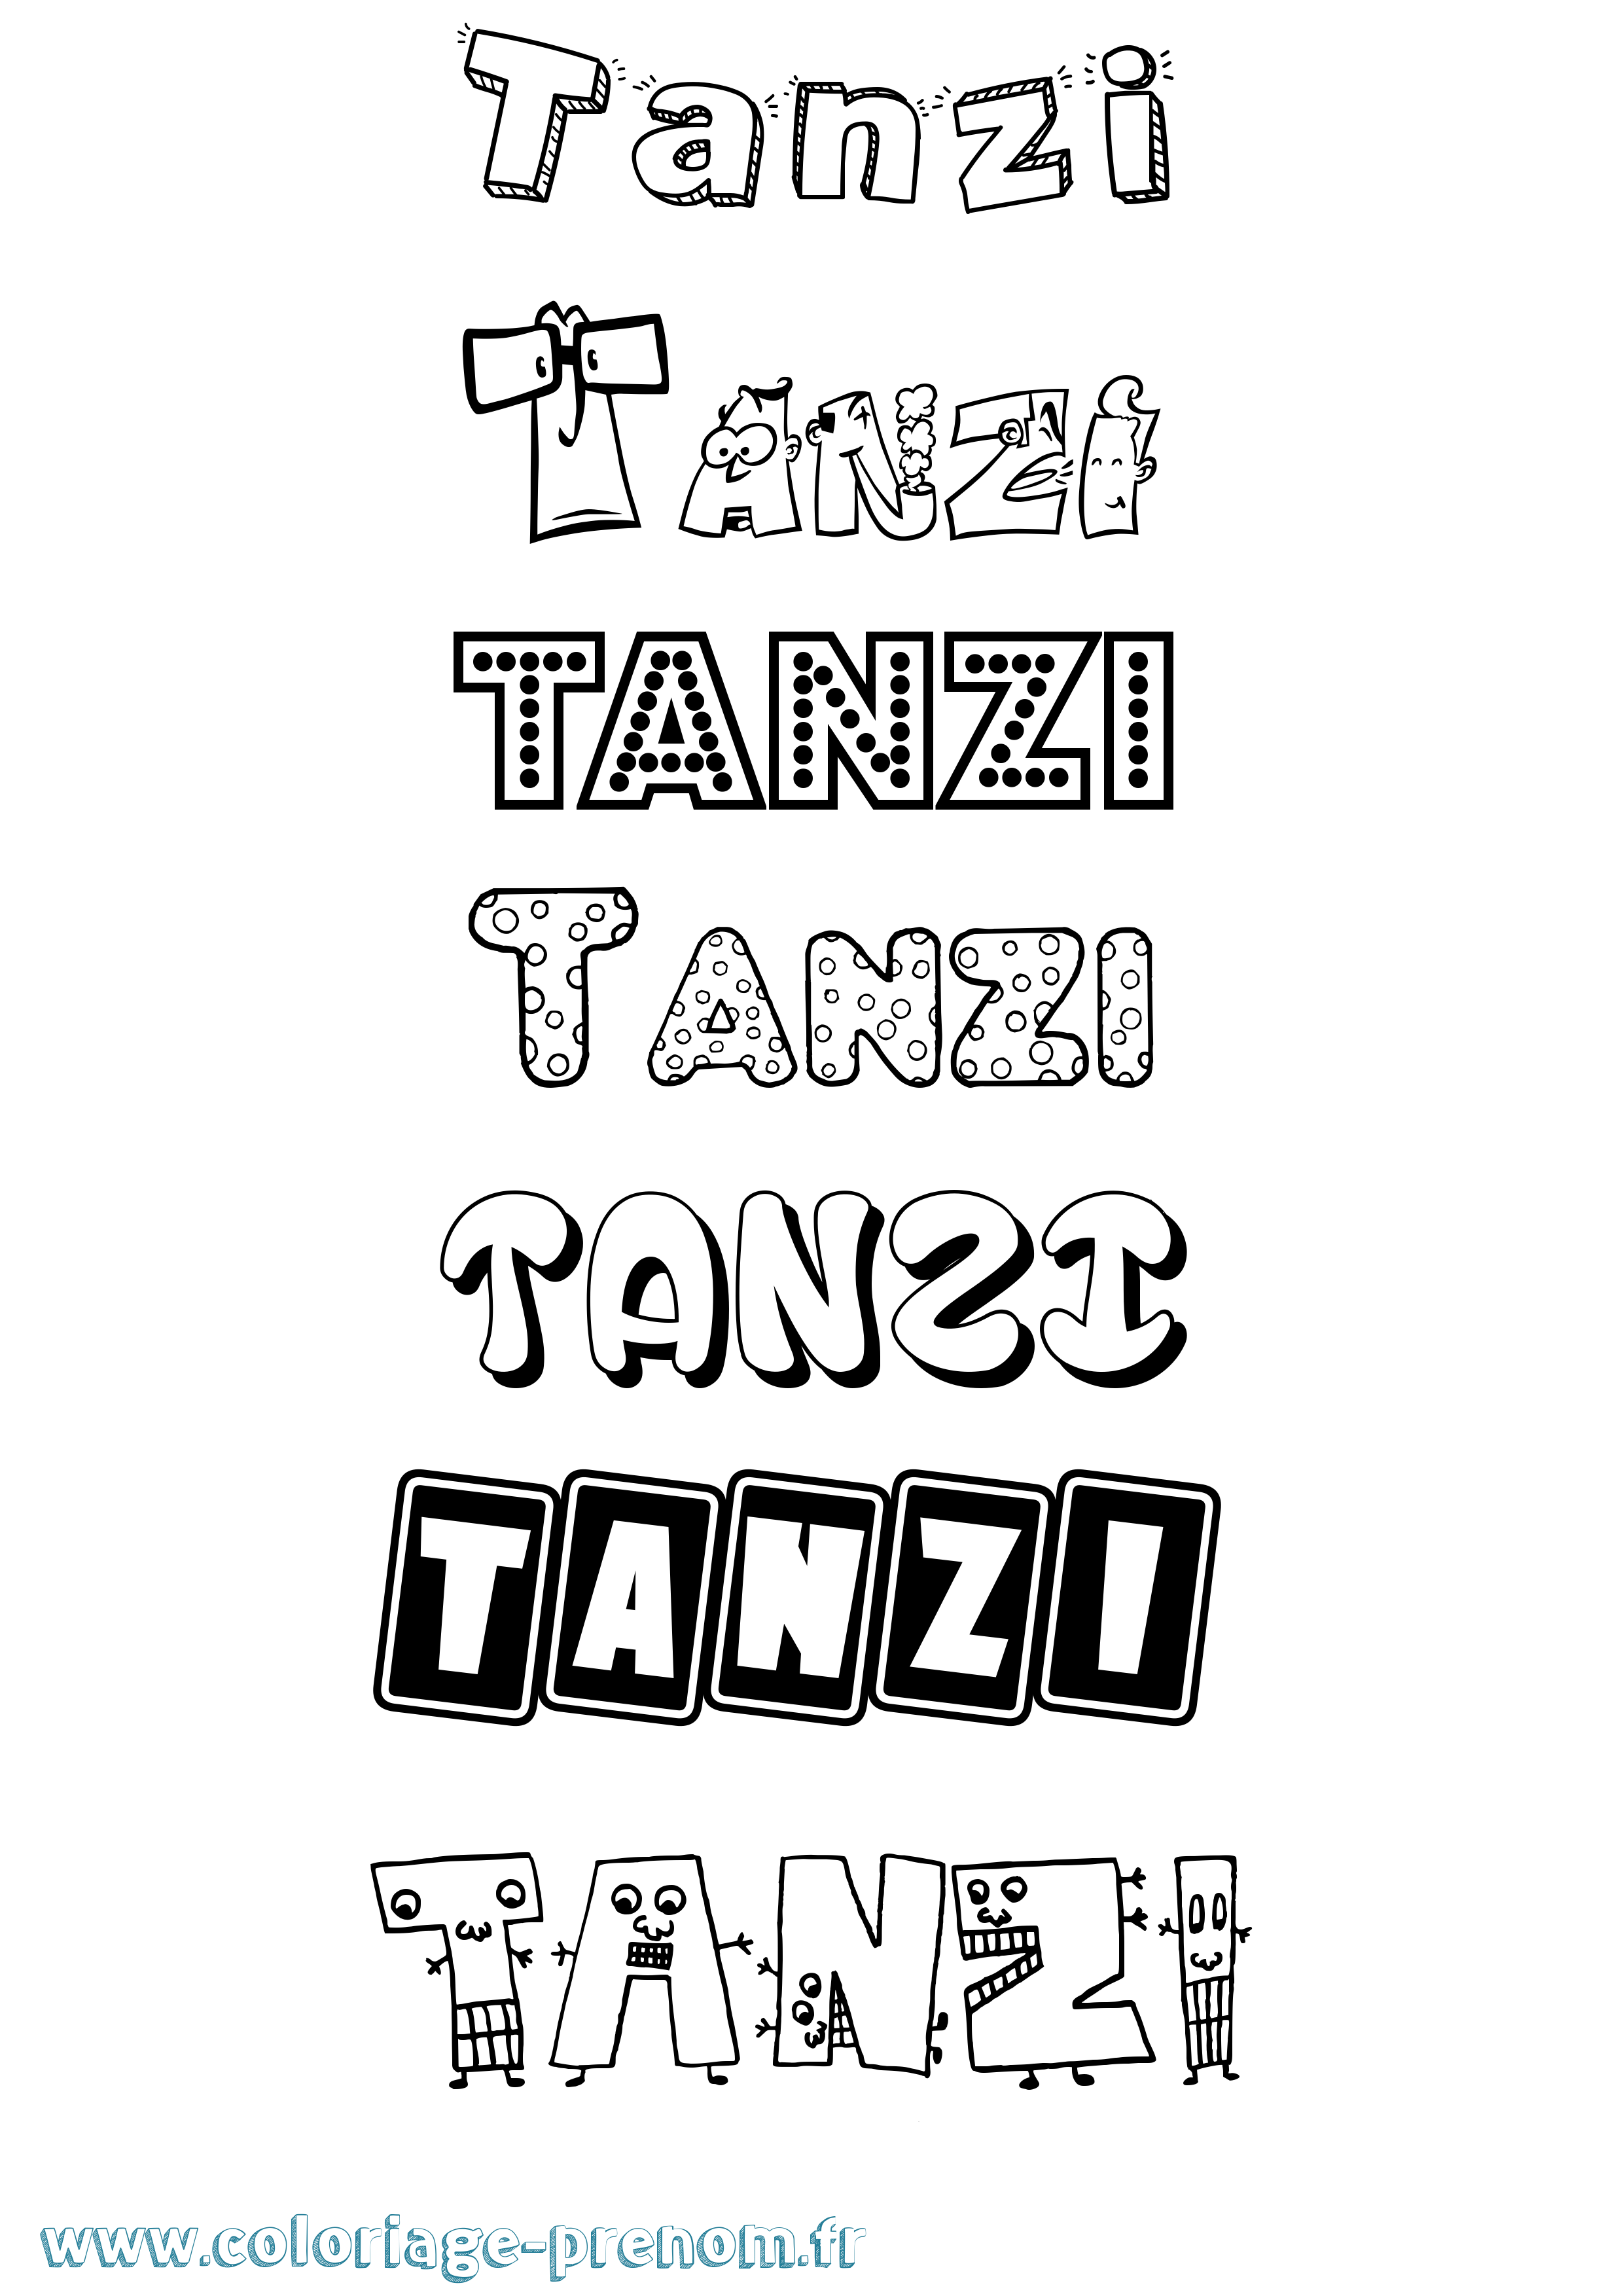 Coloriage prénom Tanzi Fun